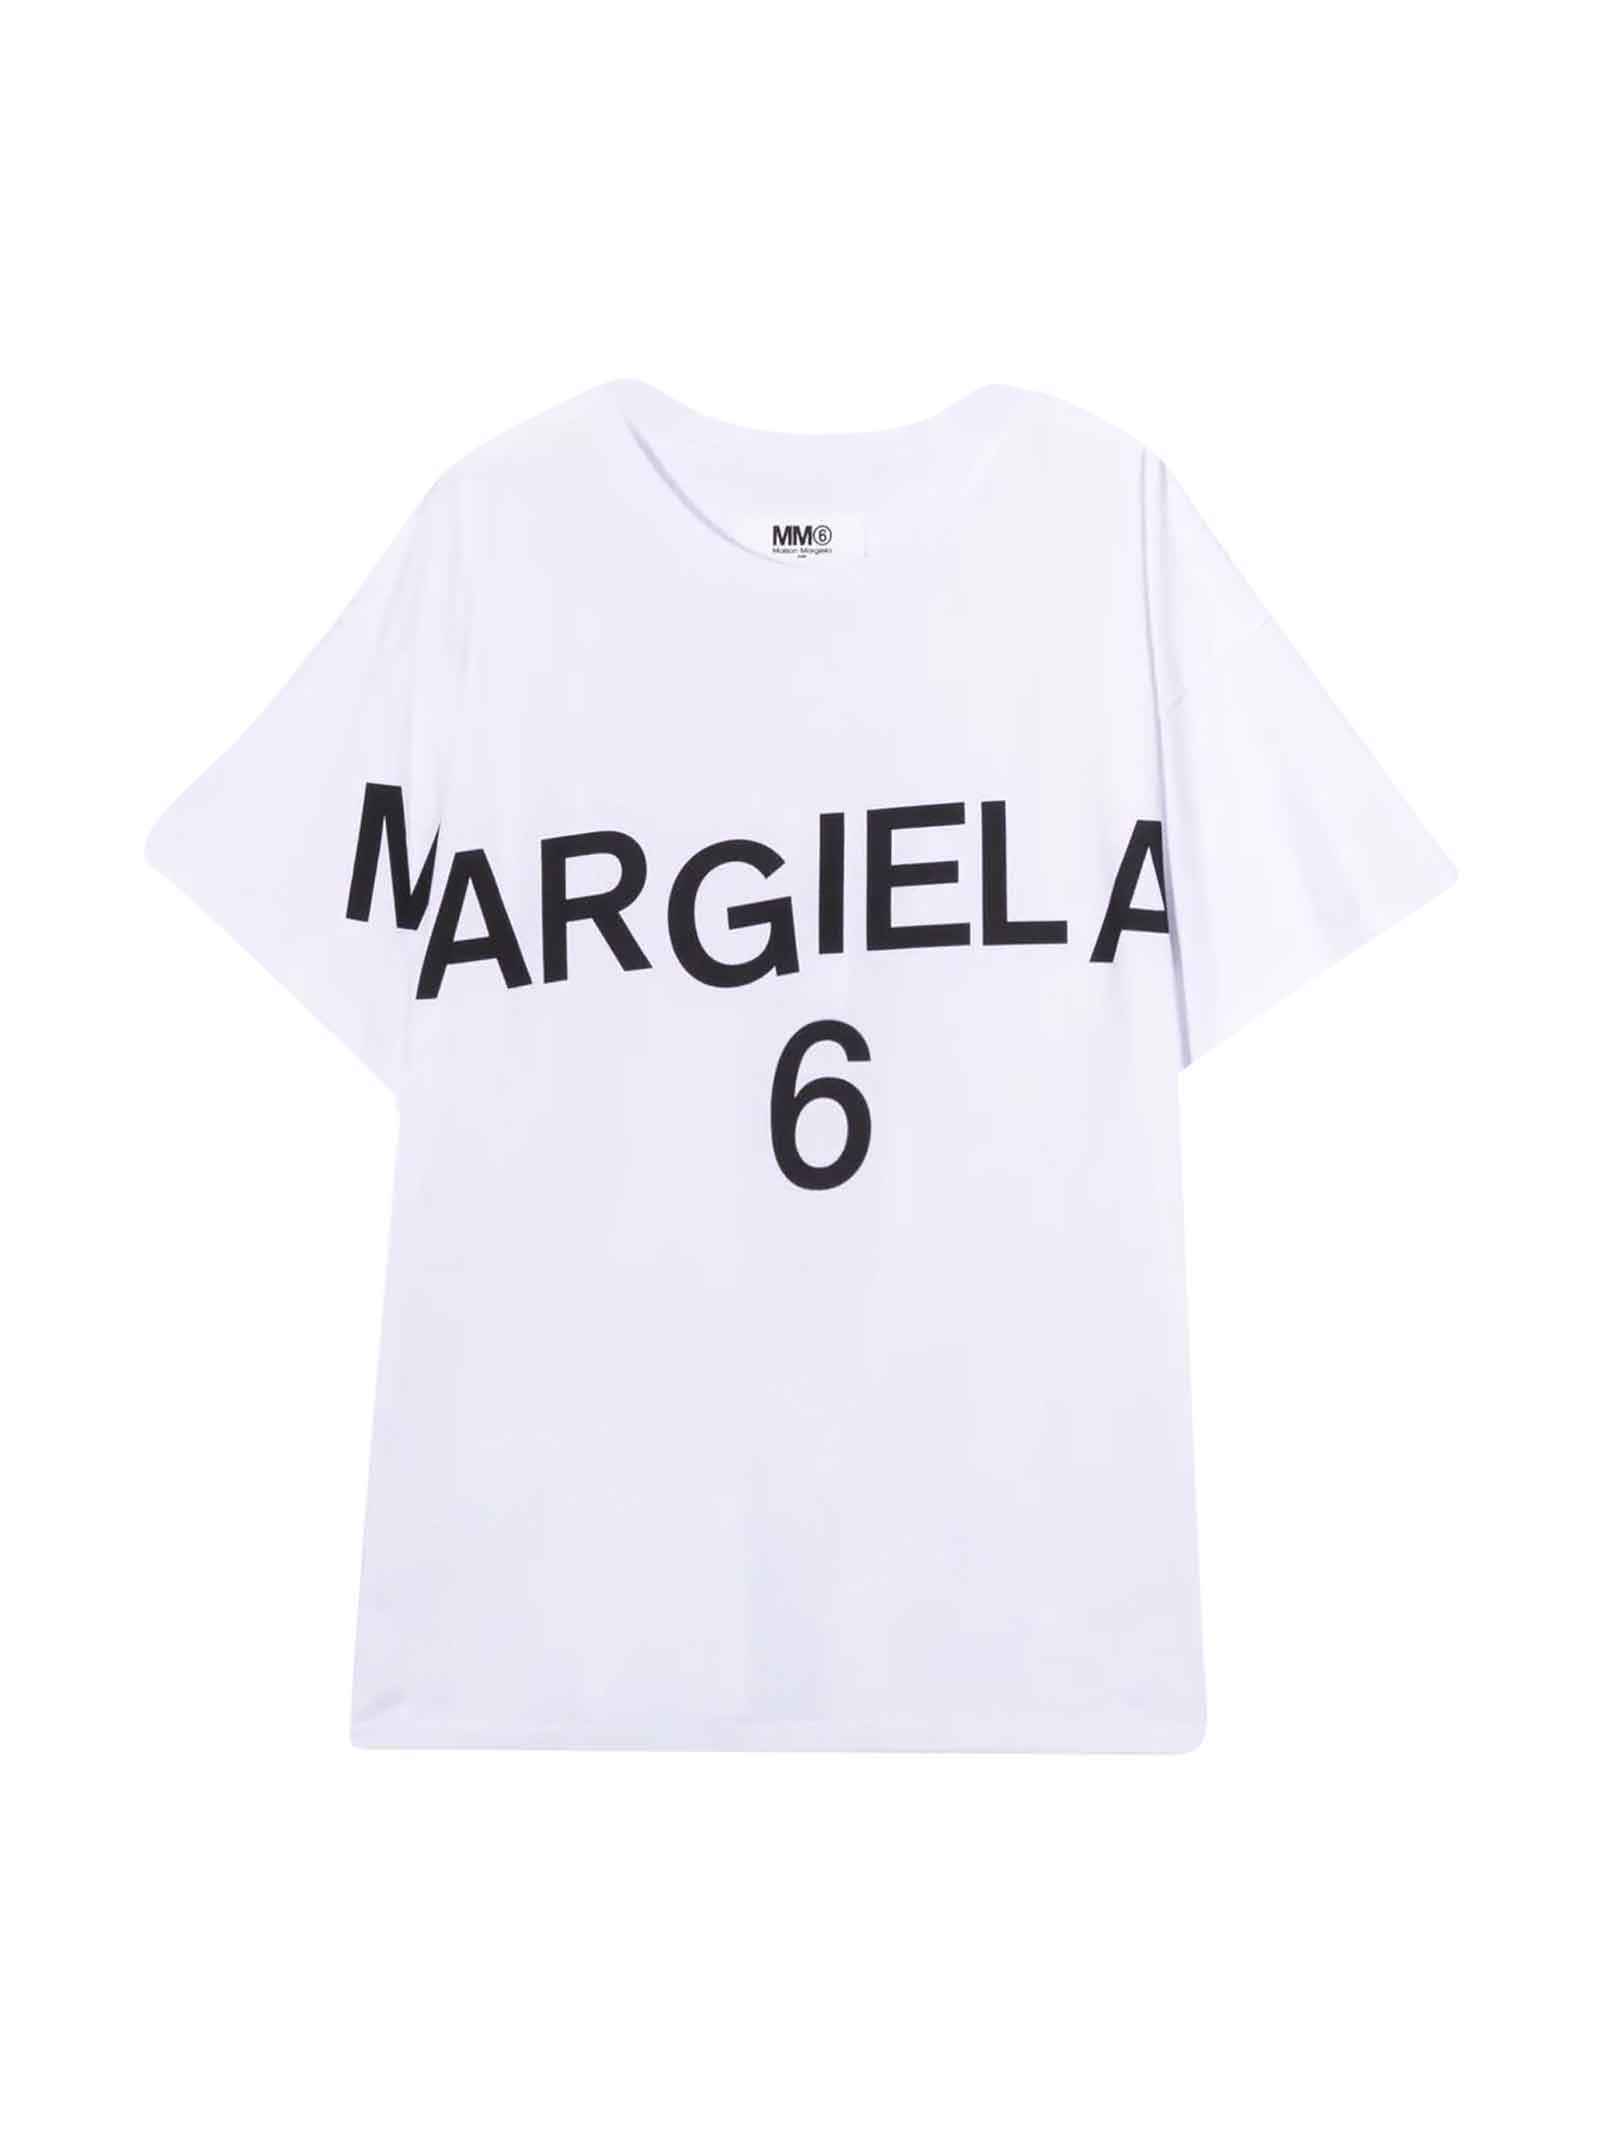 MM6 Maison Margiela White T-shirt Unisex Kids